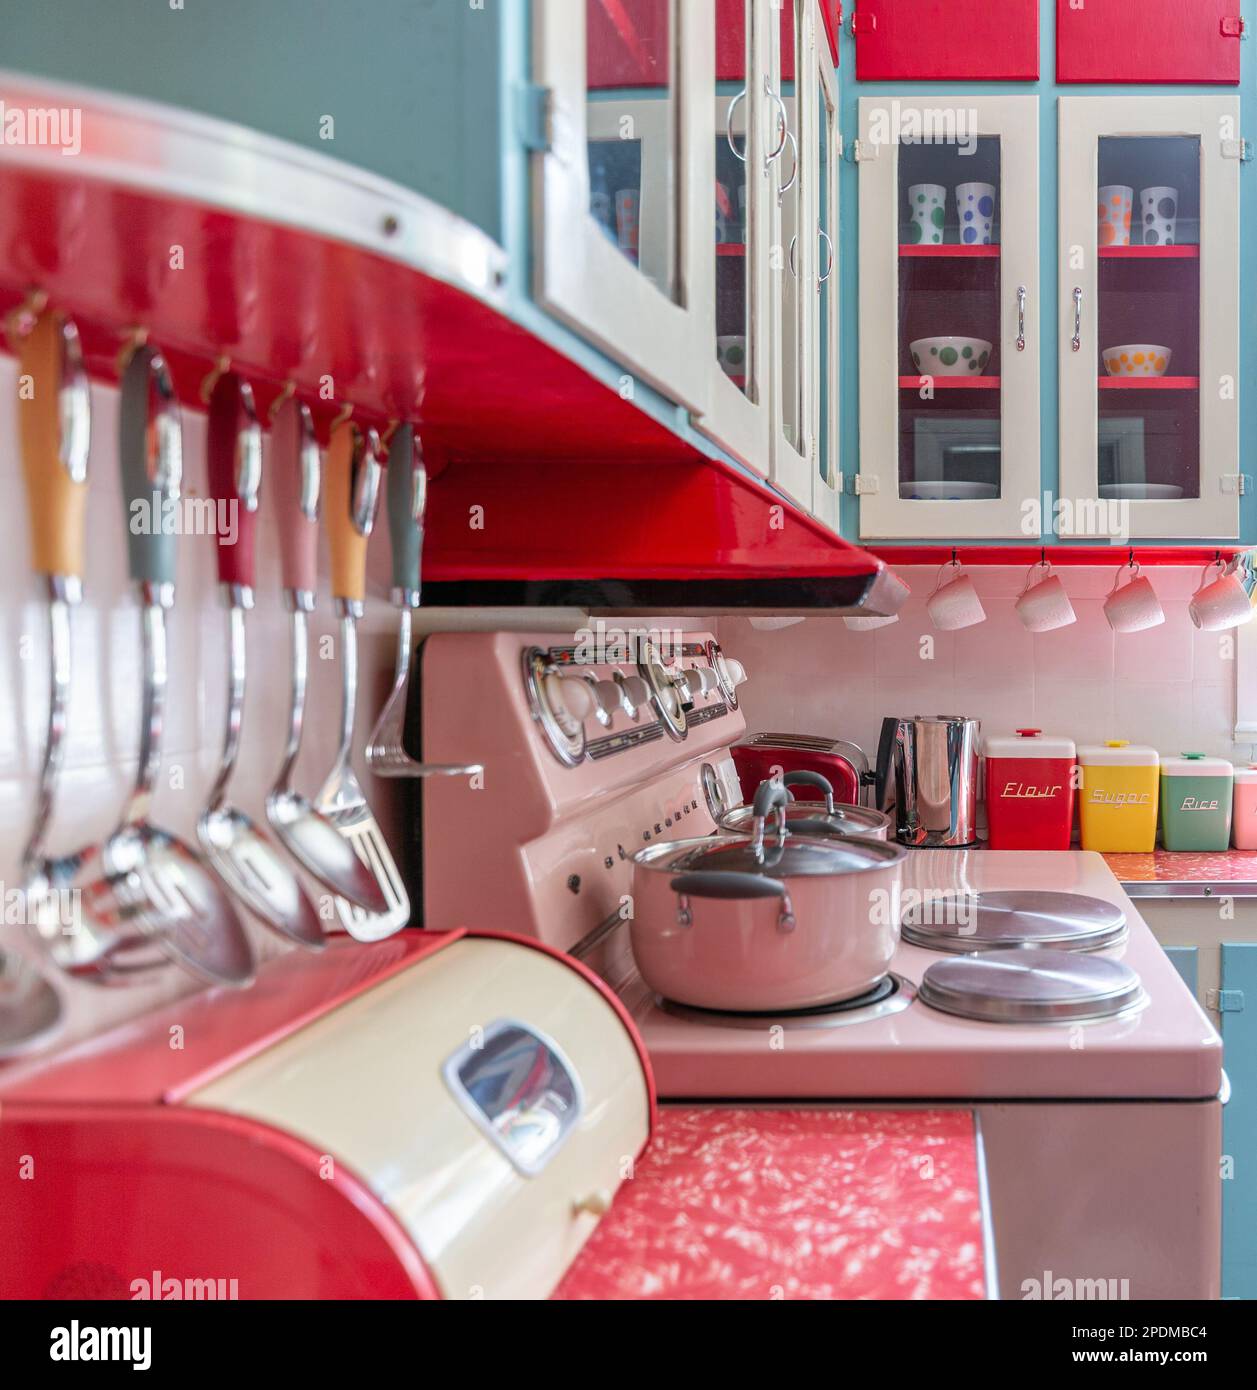 https://c8.alamy.com/comp/2PDMBC4/unique-retro-pink-and-red-old-style-kitchen-2PDMBC4.jpg